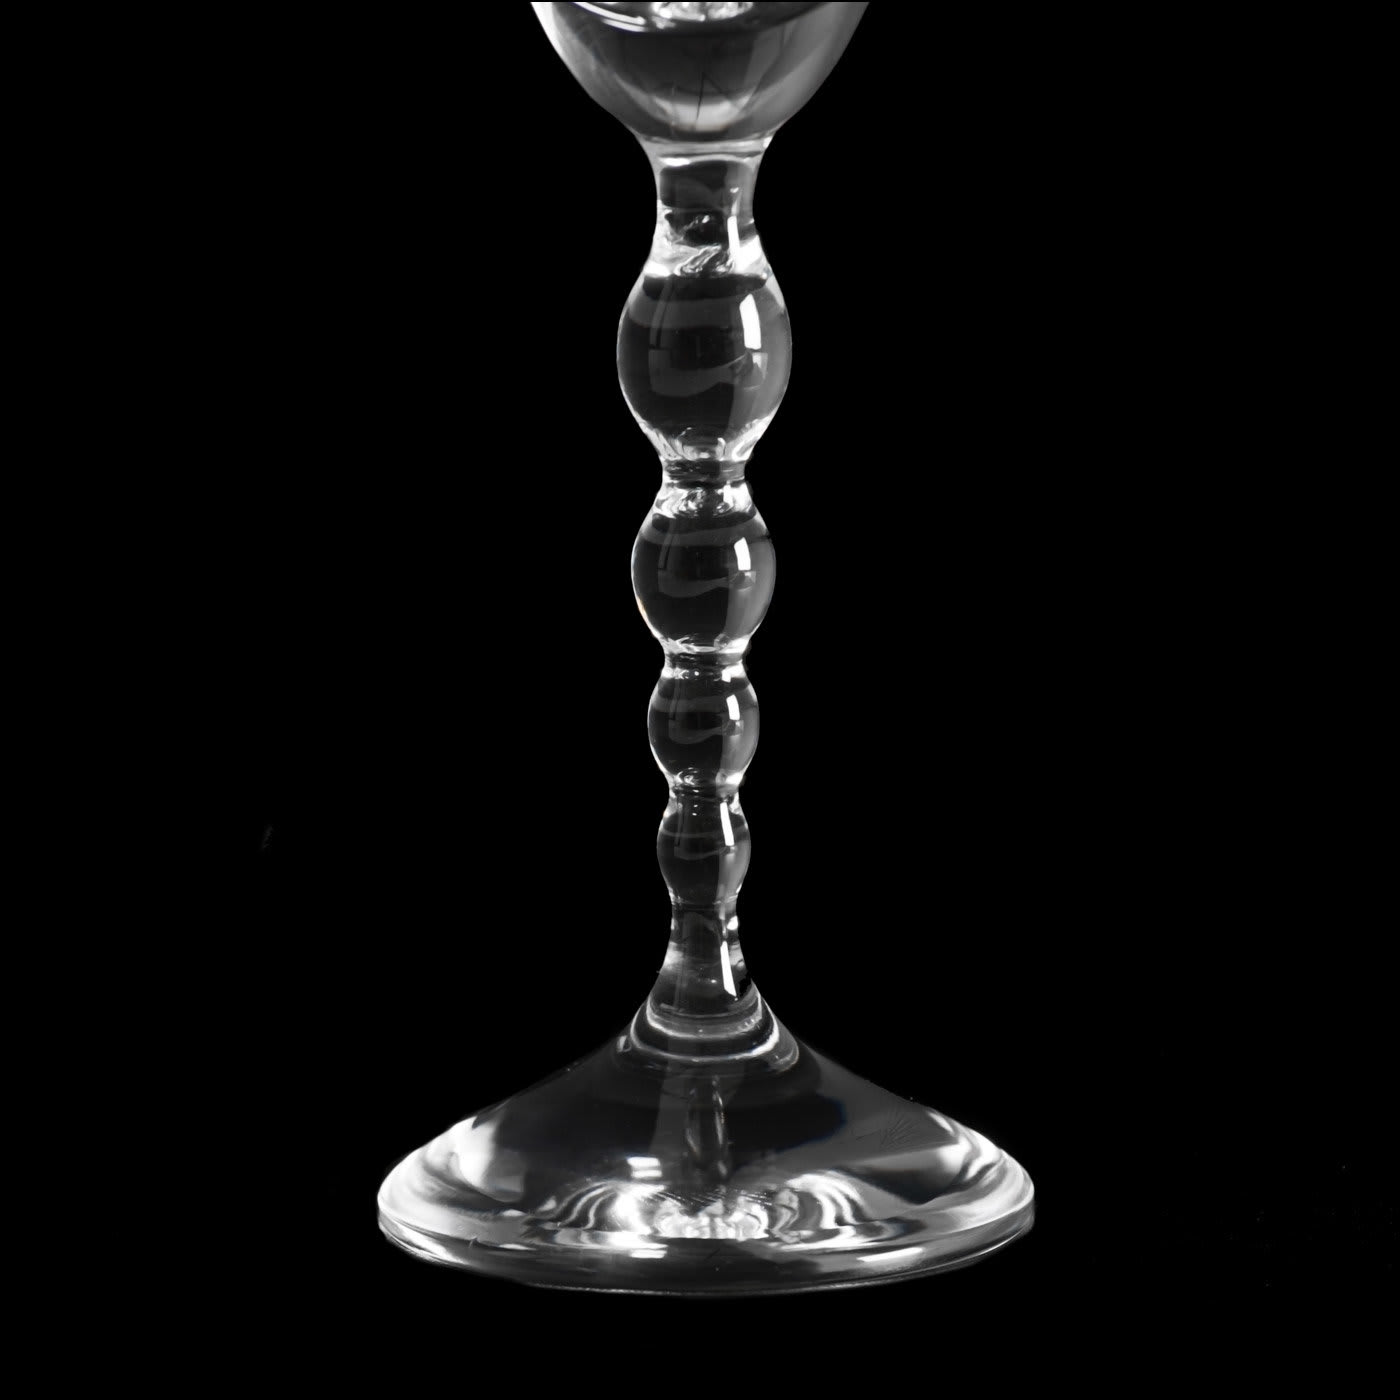 Set of 6 Collier Crystal Glasses N.2 - Cristalleria ColleVilca